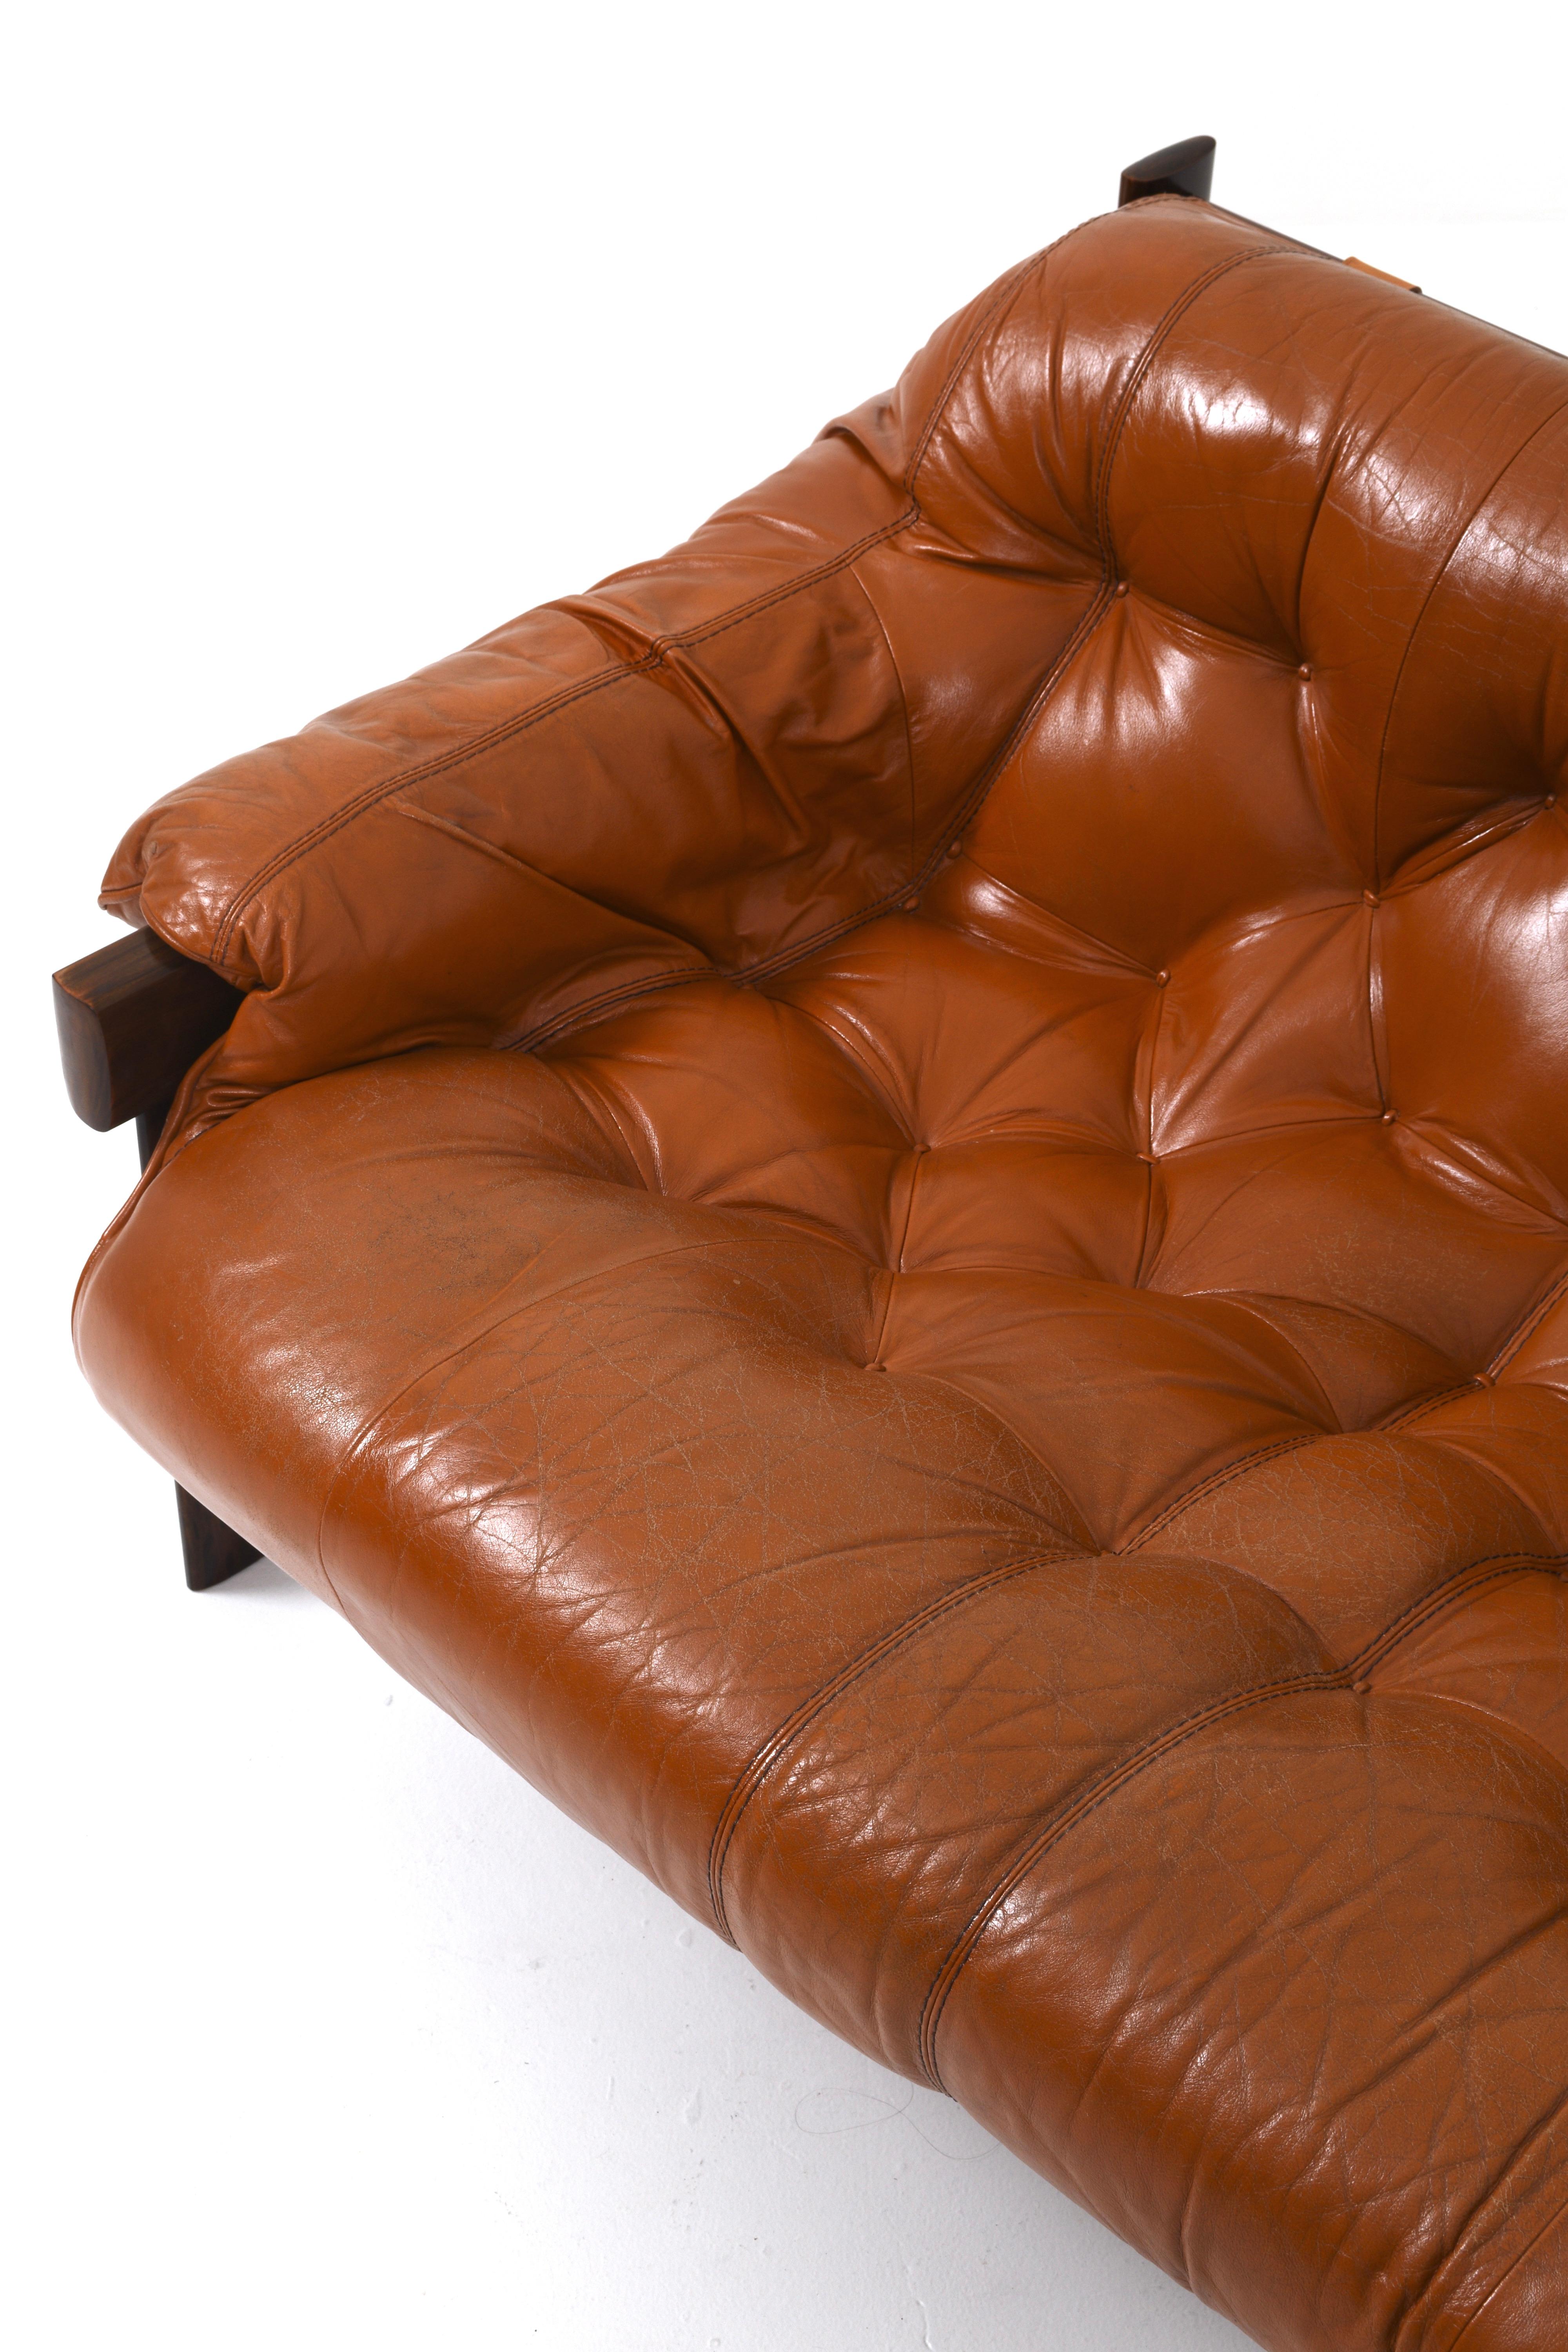 Leather Percival Lafer MP-41 sofa in cognac leather, Brazil 1970s